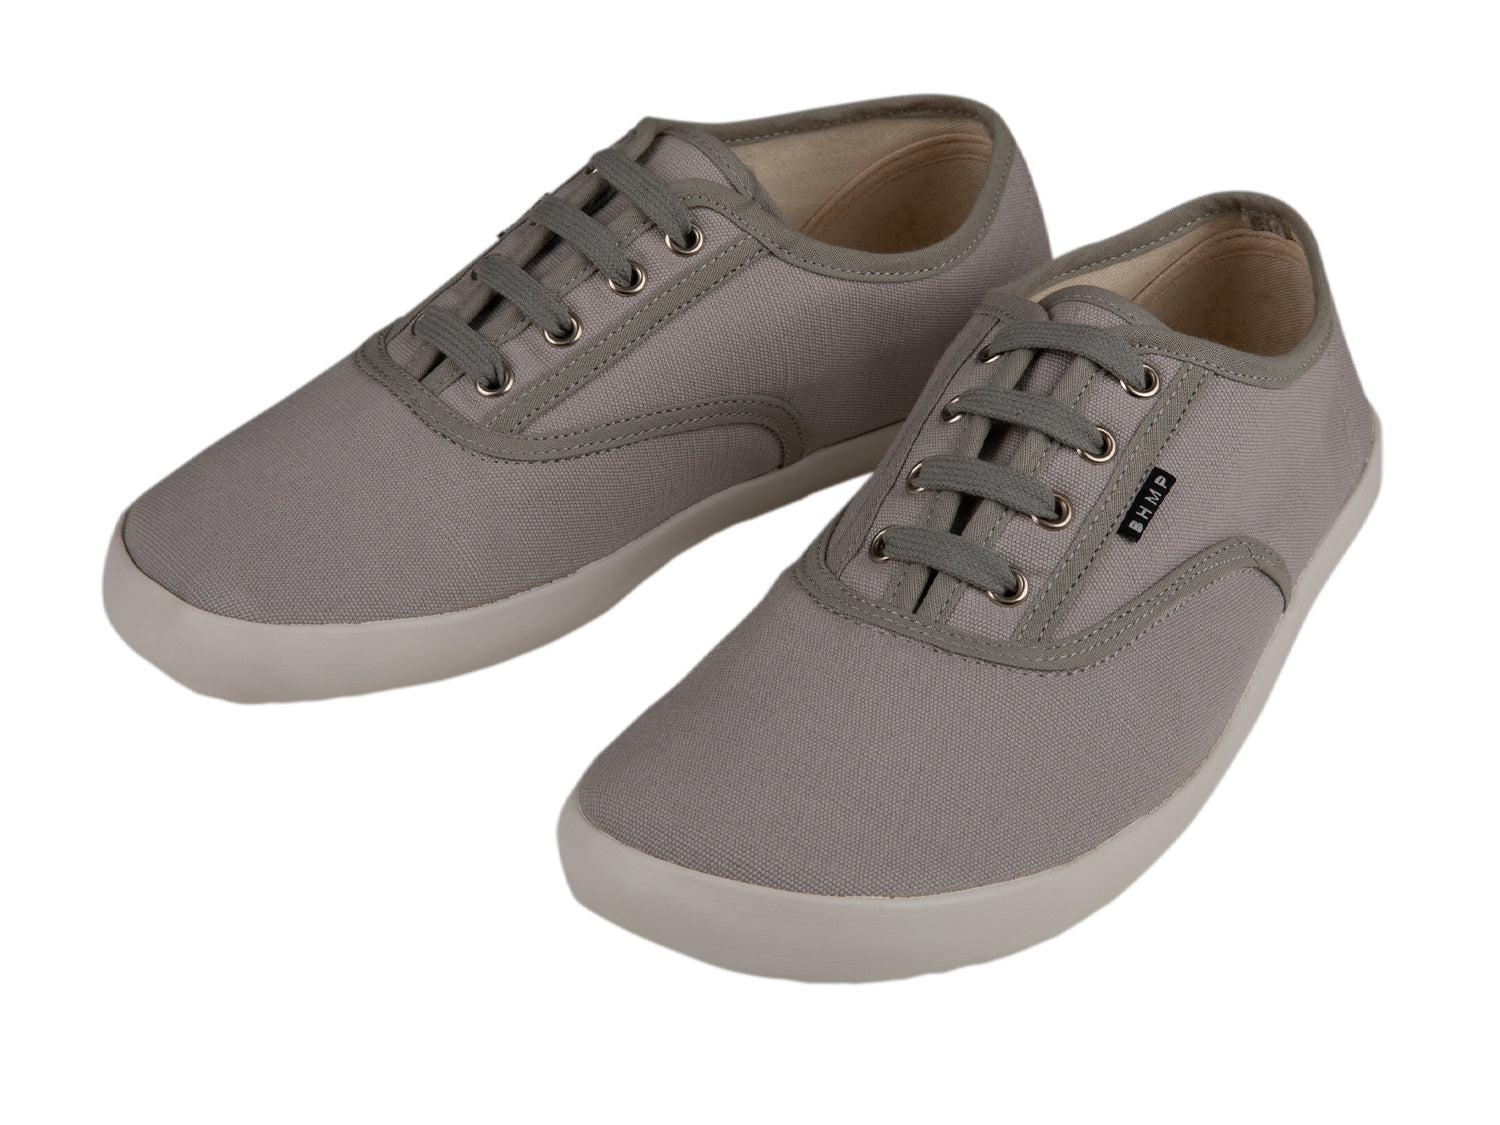 Barefoot sneakers vegan hemp grey white Bohempia – Barefoot Shoes Australia